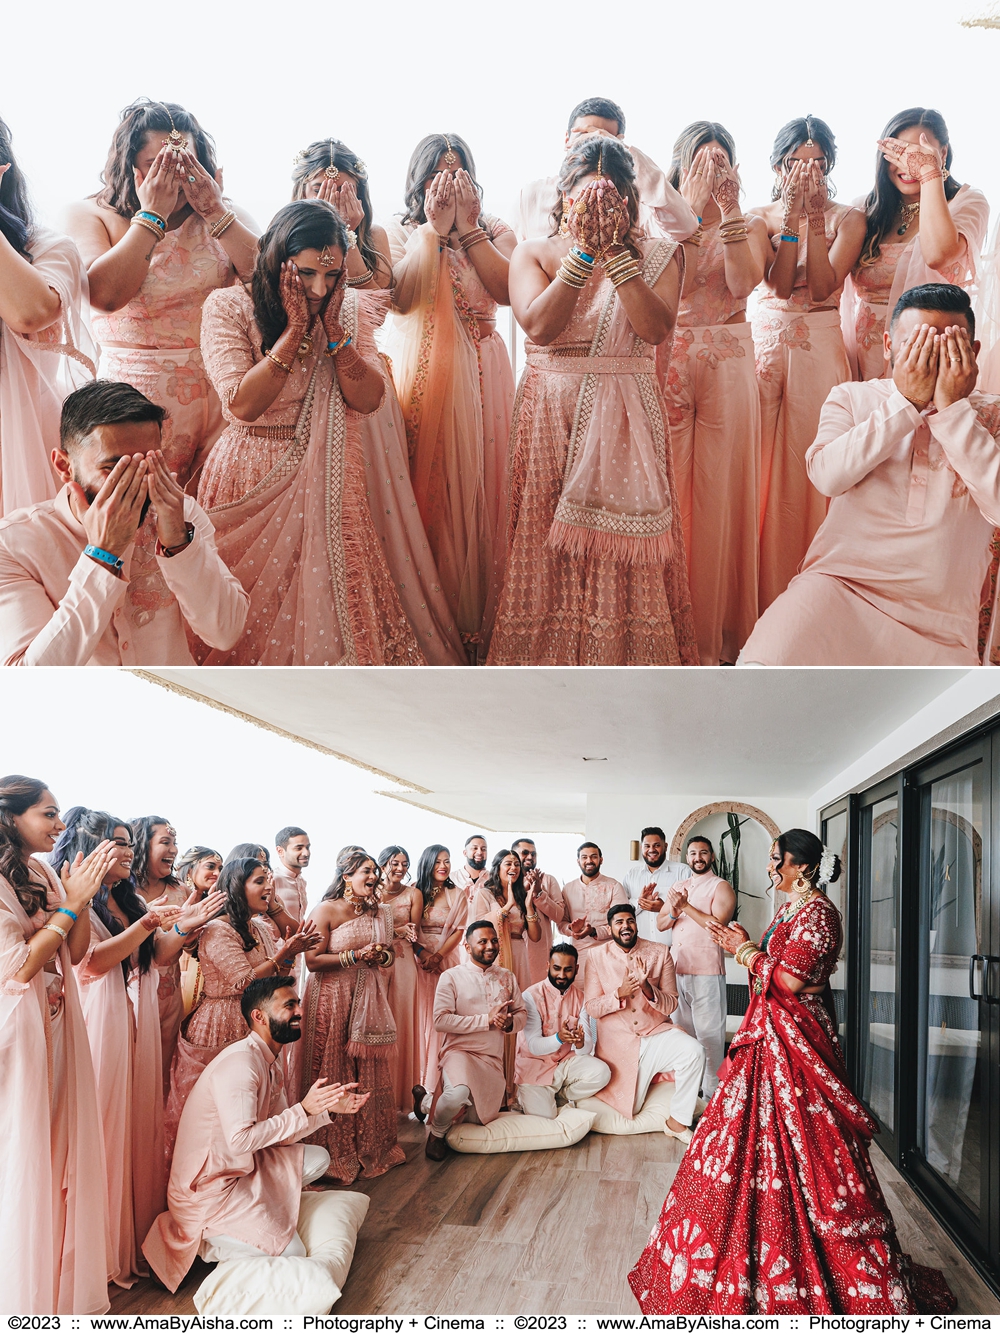 Hindu wedding bridal party